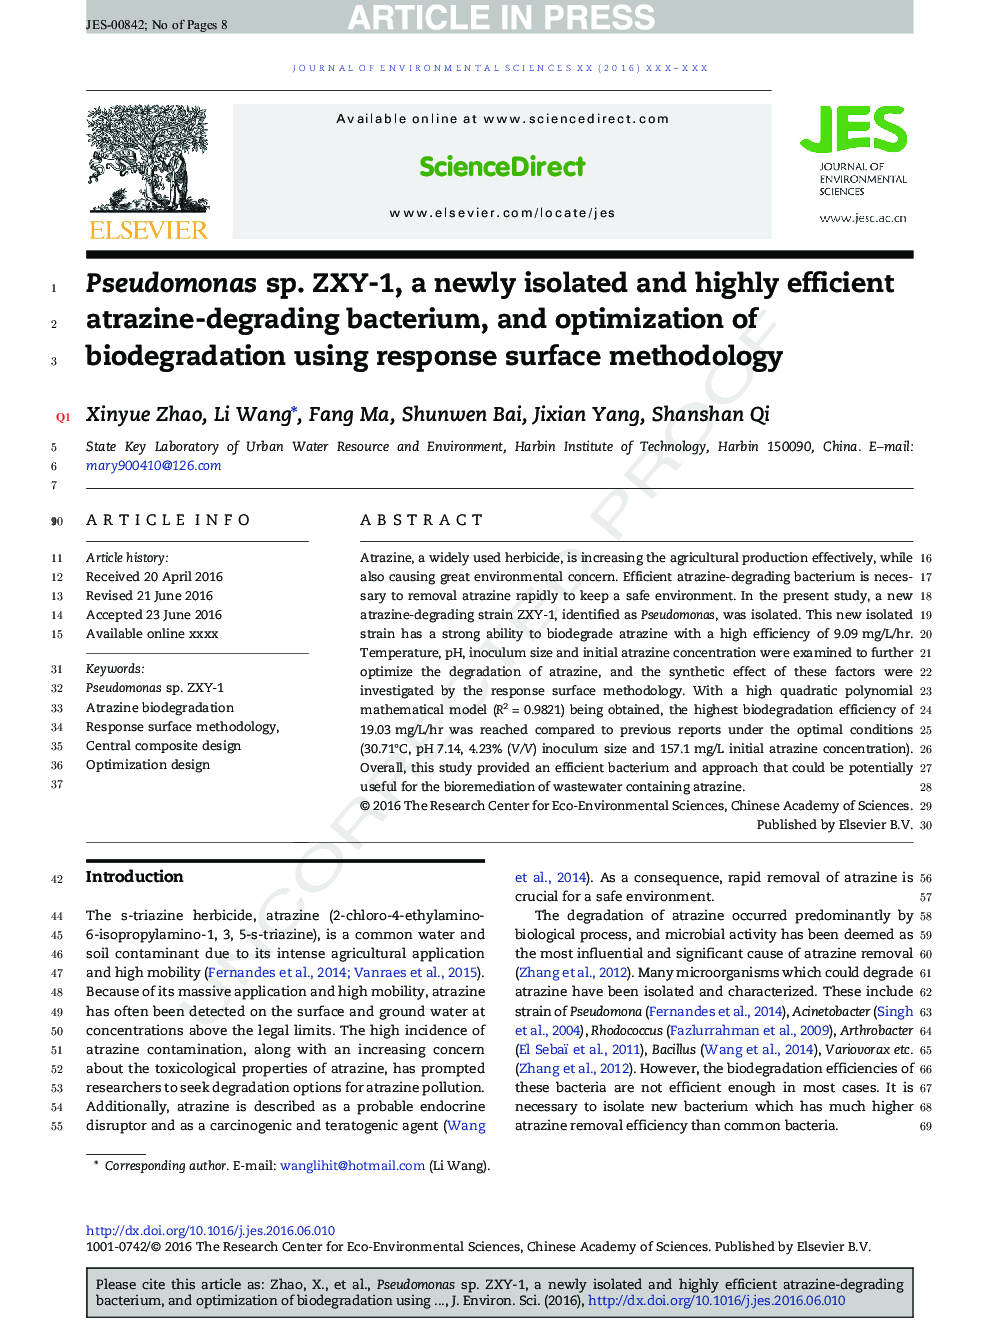 Pseudomonas sp. ZXY-1, a newly isolated and highly efficient atrazine-degrading bacterium, and optimization of biodegradation using response surface methodology